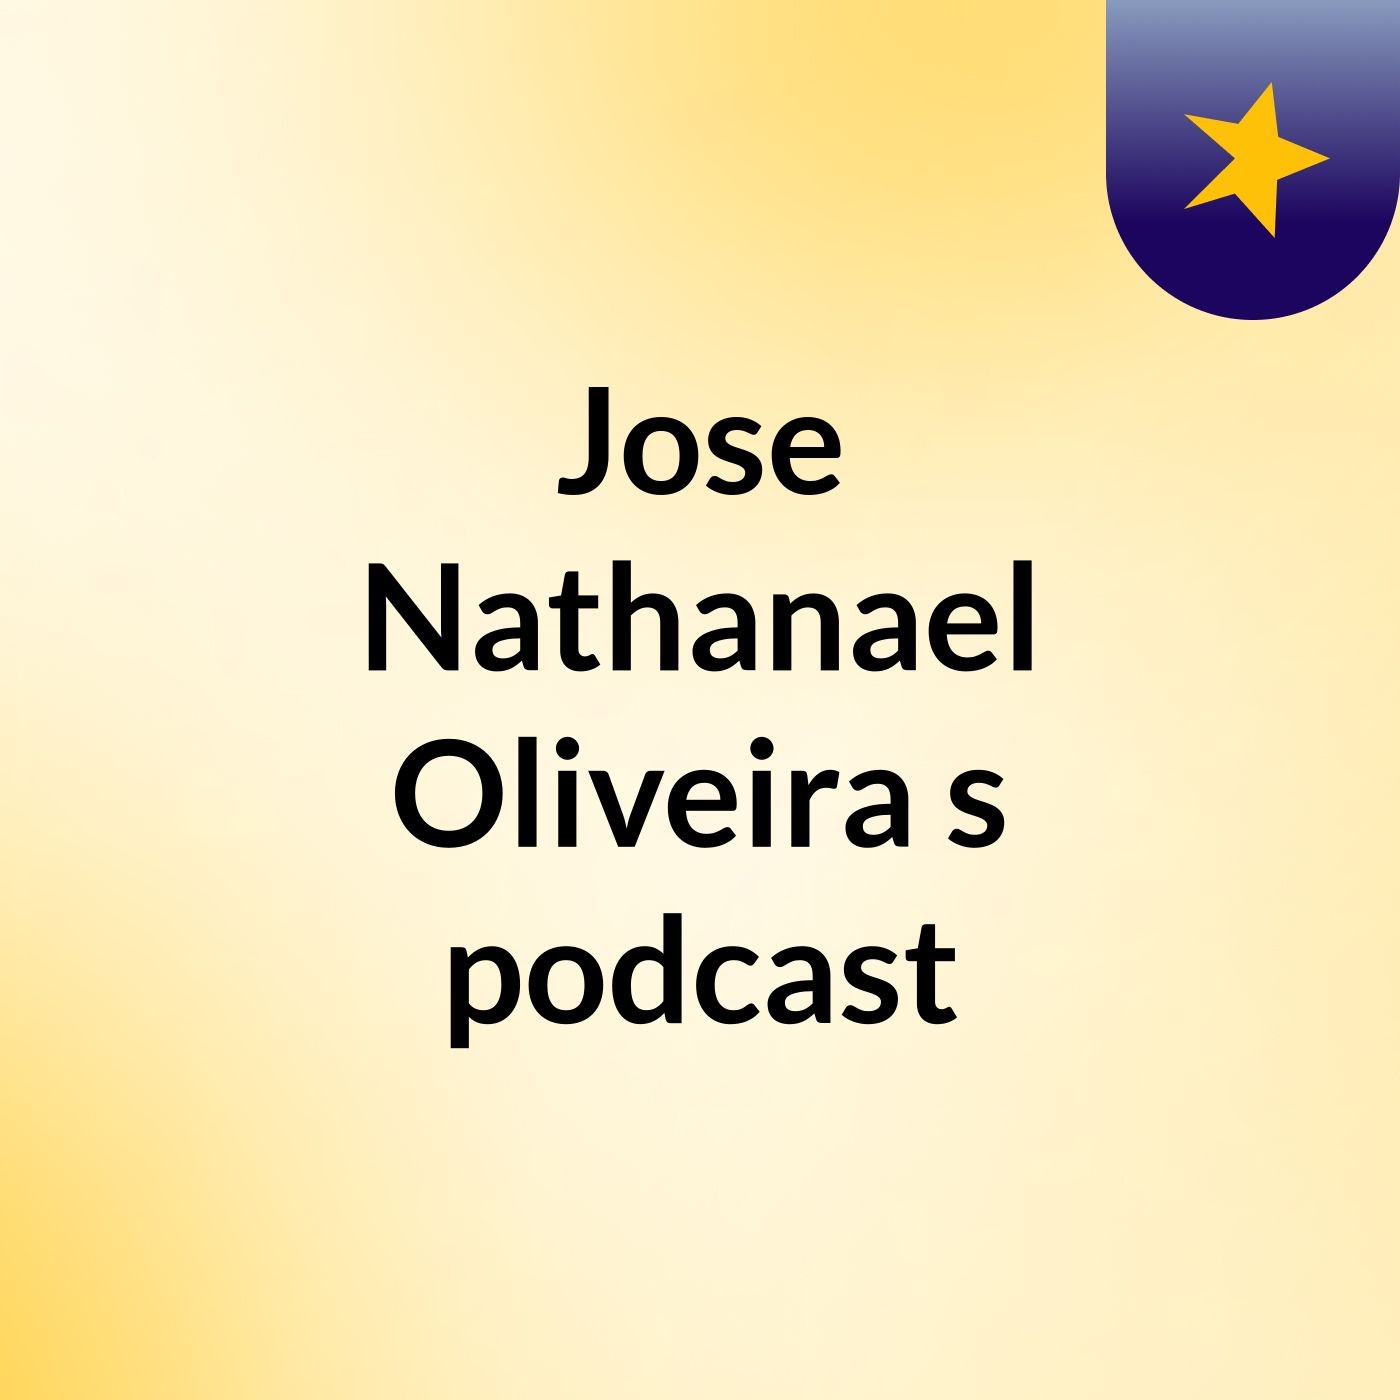 Jose Nathanael Oliveira's podcast